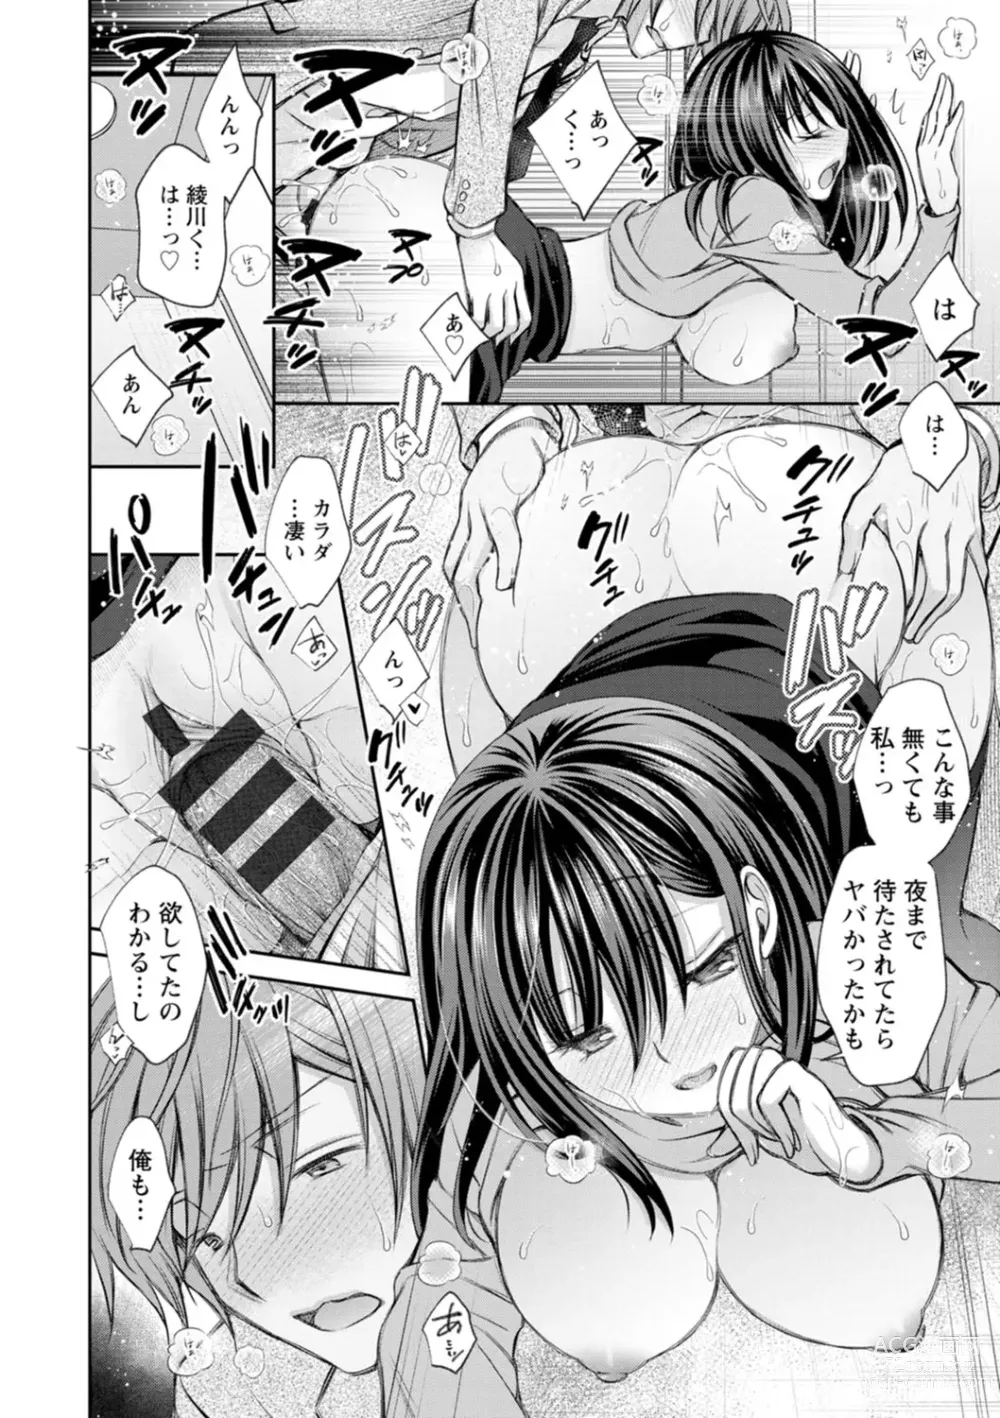 Page 14 of manga Furete Mitakute.